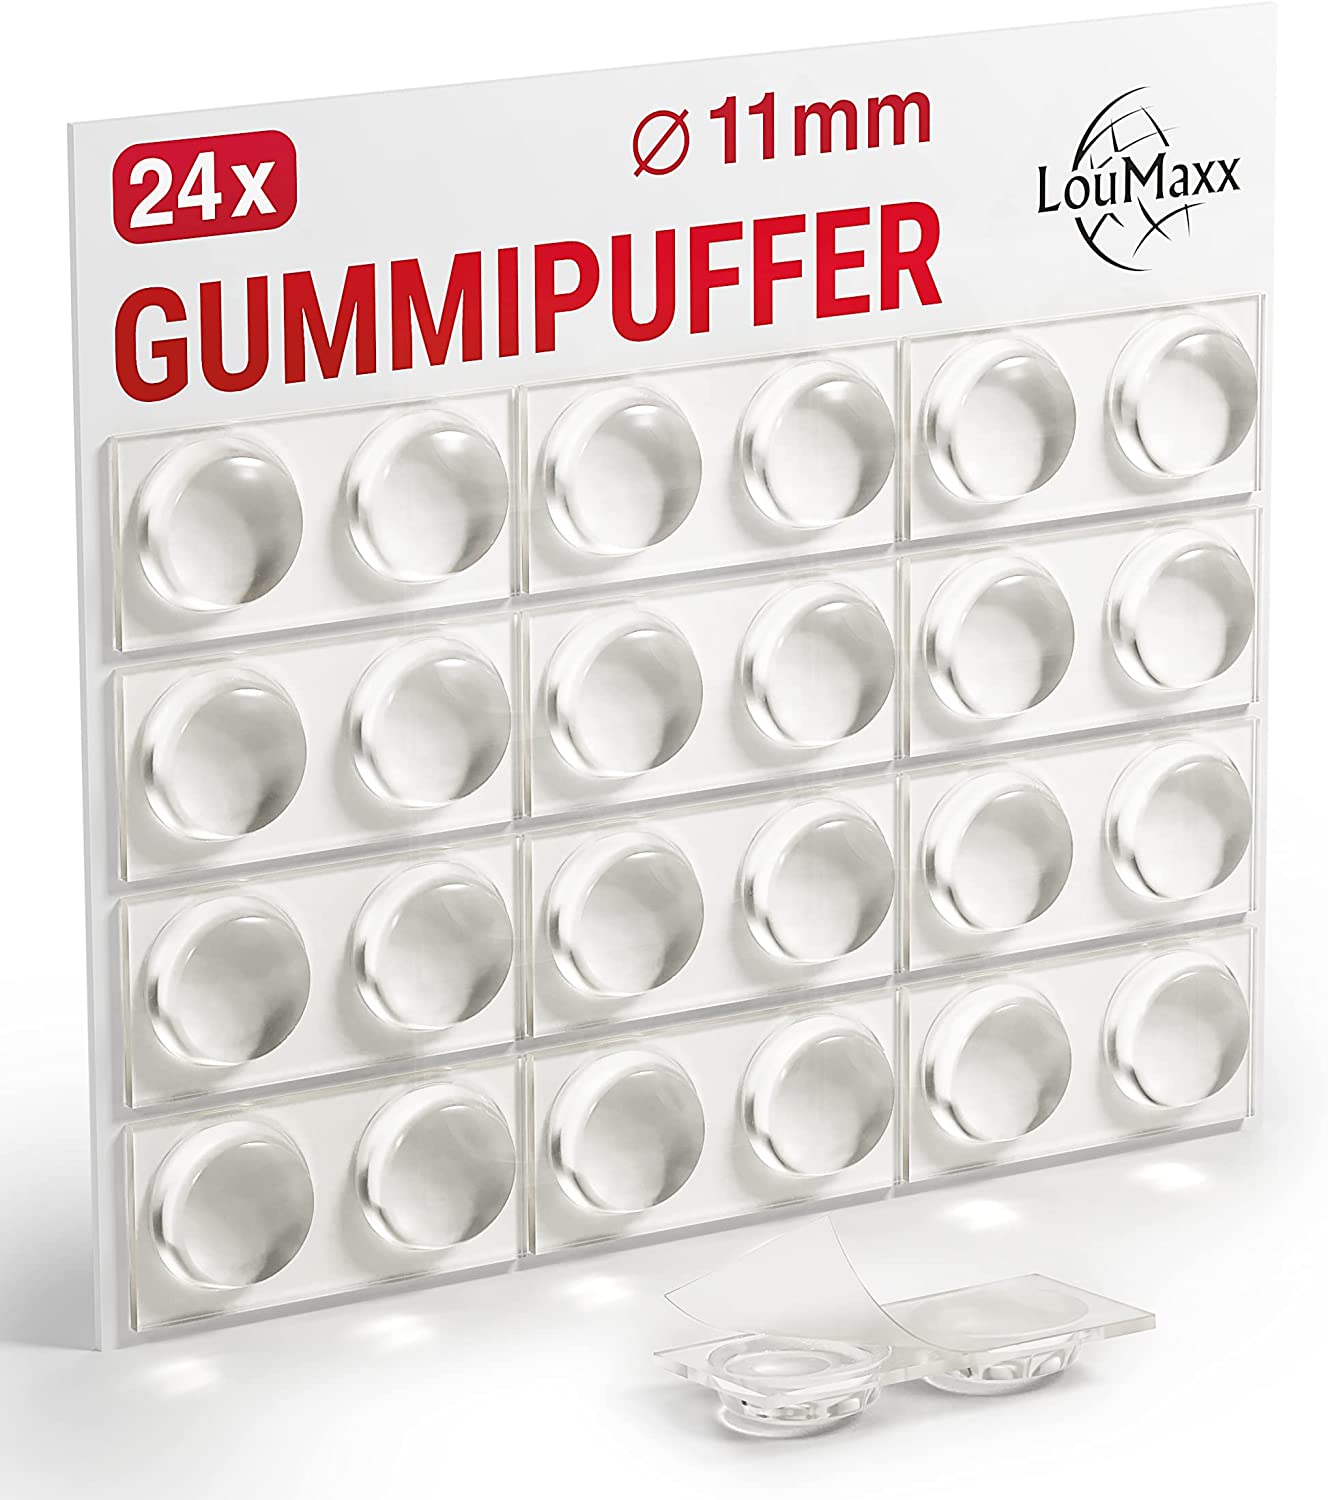 LouMaxx Gummipuffer - 24x Puffer transparent 11mm Ø - Gumminoppen für Glasplatten – Elastikpuffer transparent selbstklebend – Anschlagpuffer